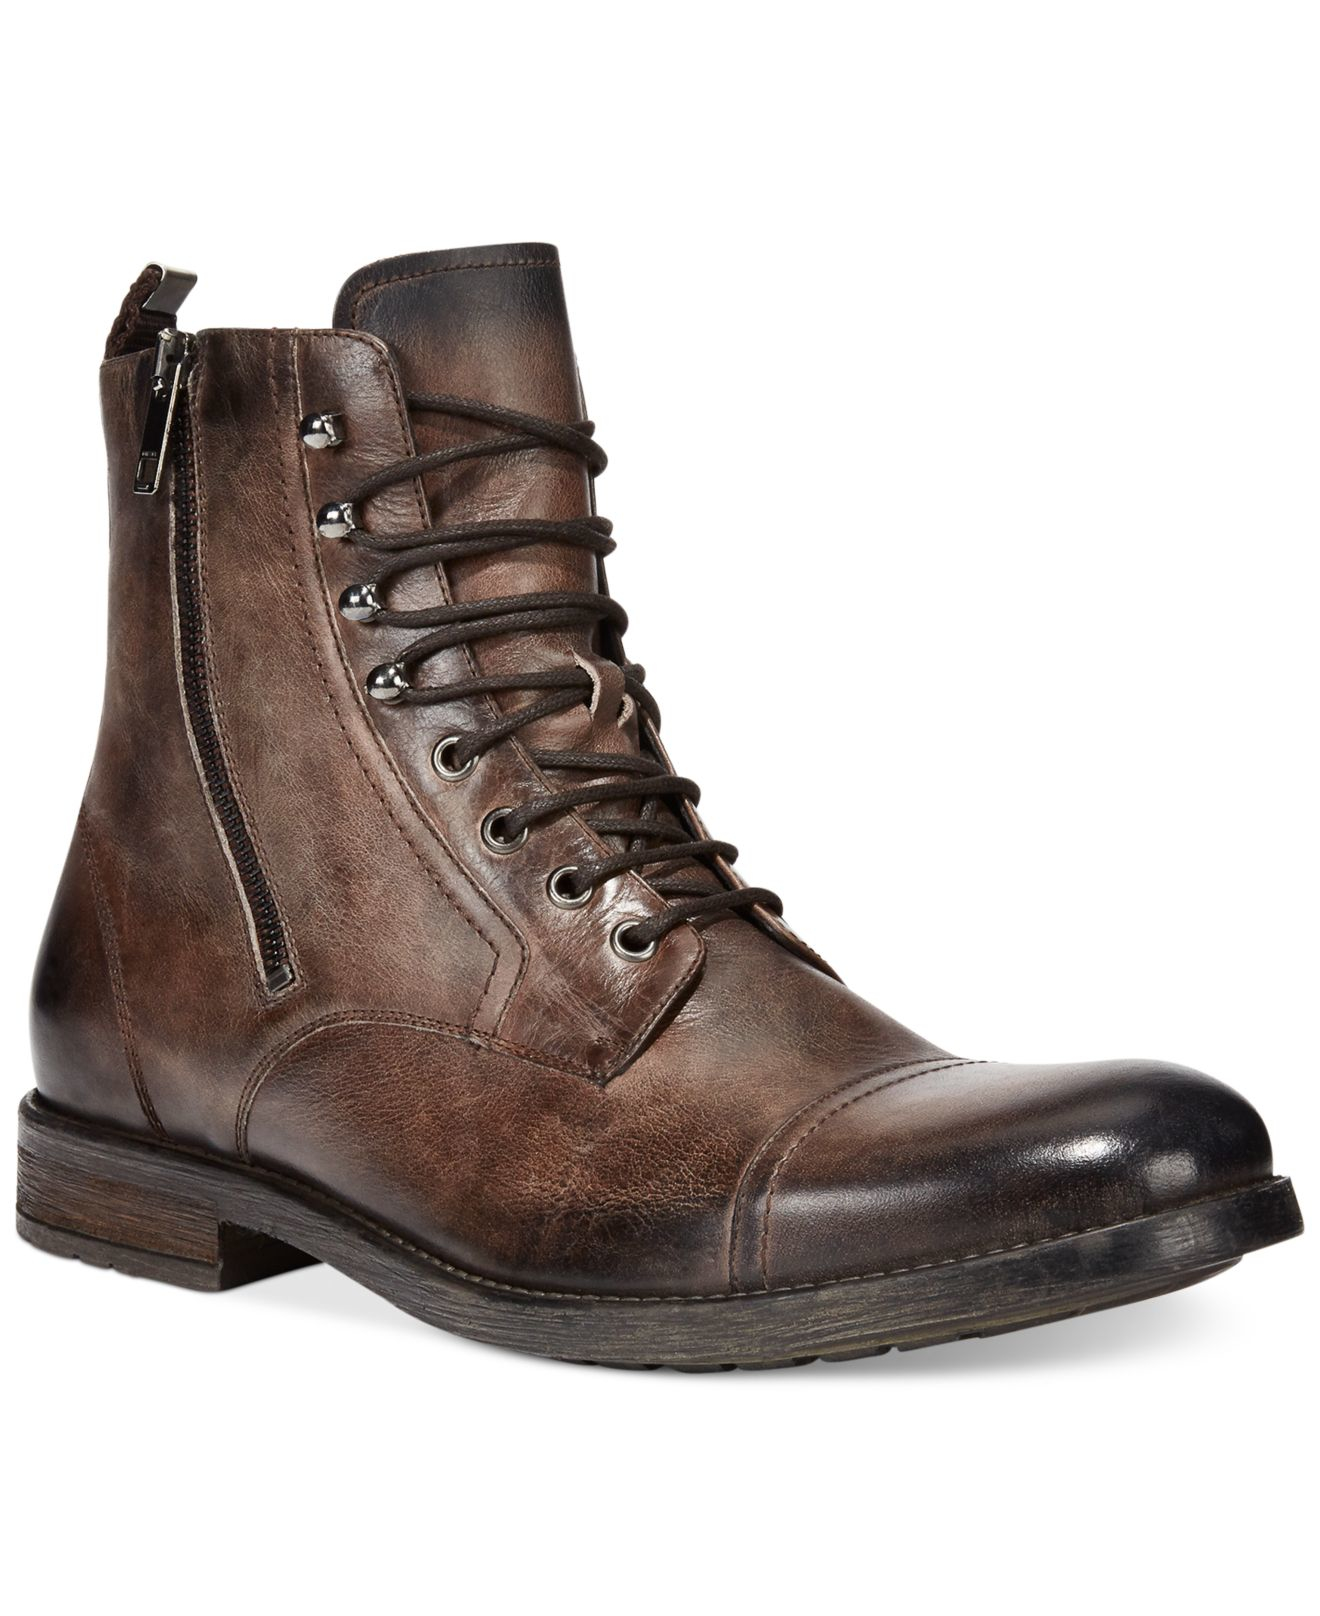 DIESEL Serberhus D-kallien Boots in Brown for Men - Lyst